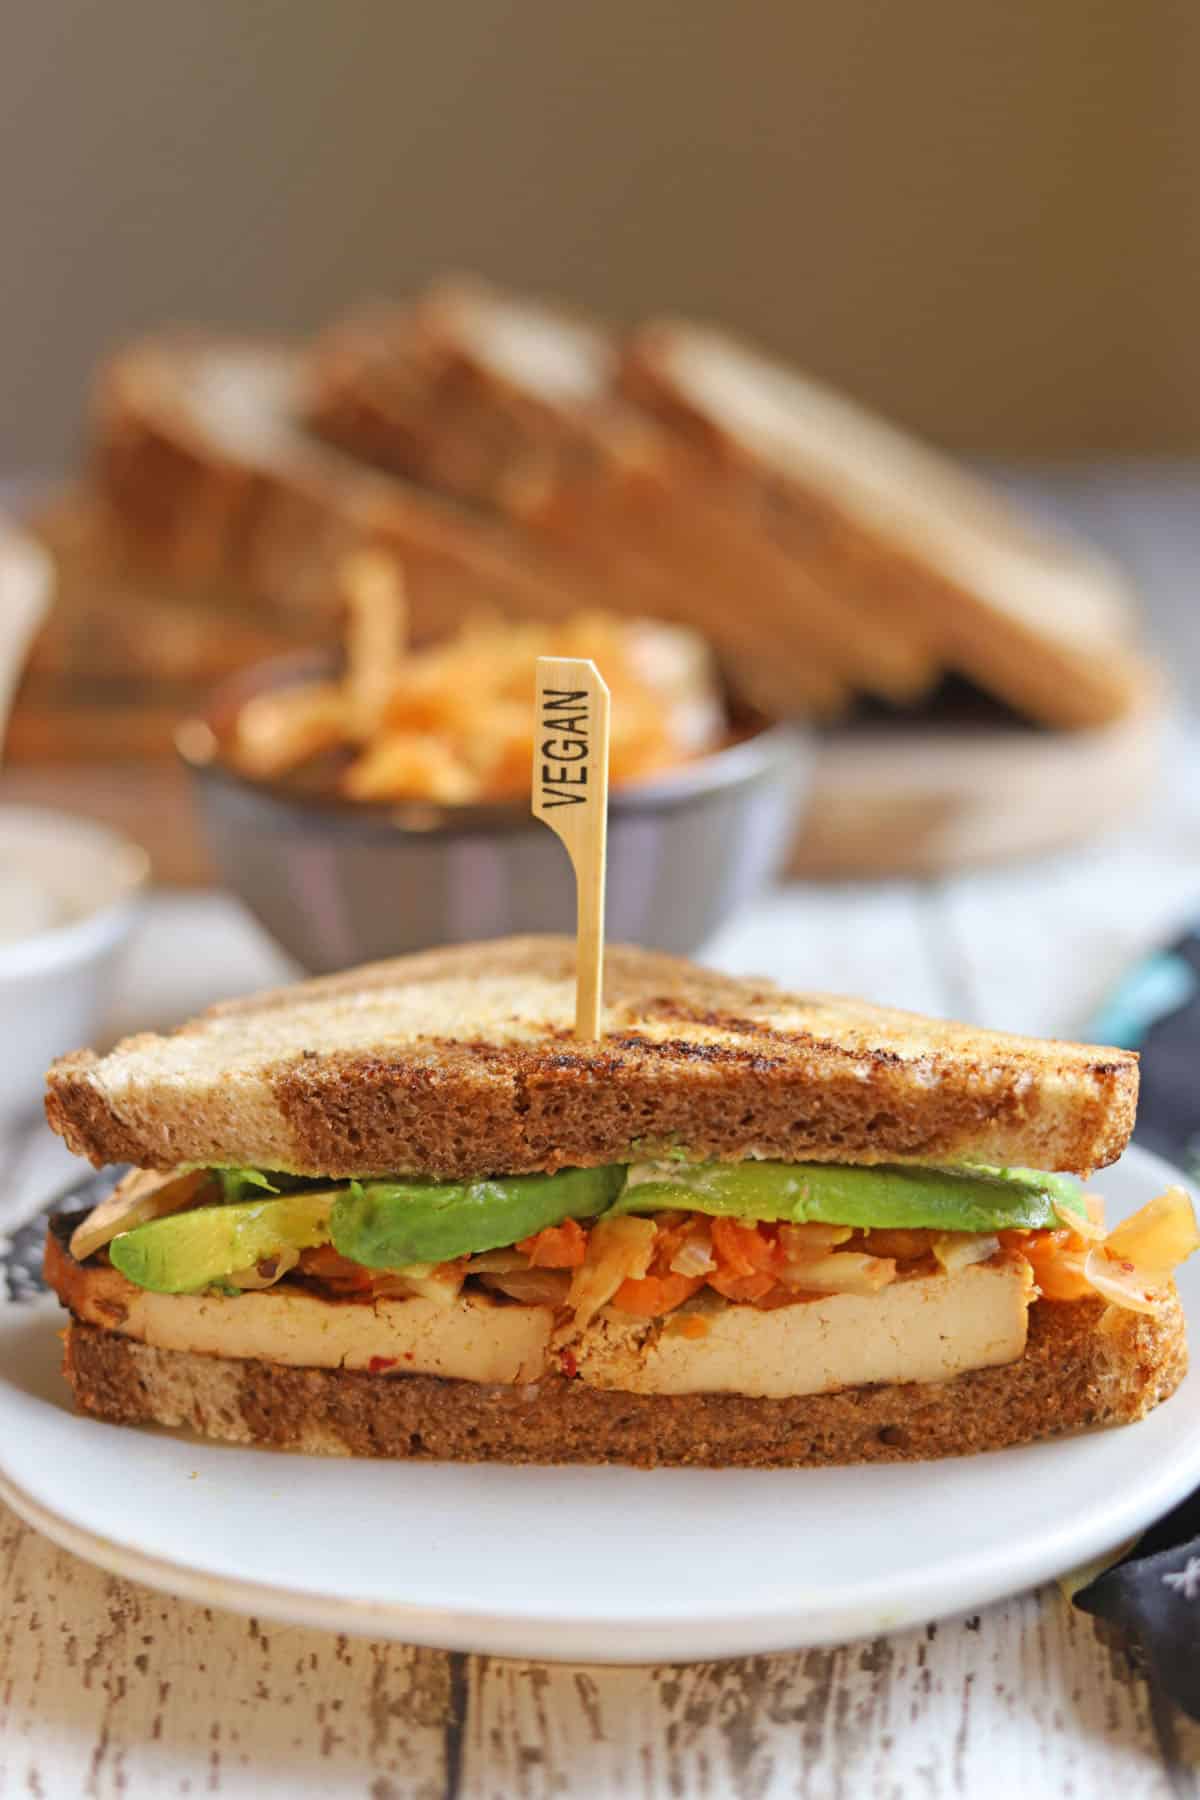 Bulgogi tofu sandwich cut in half, showing avocado and kimchi.